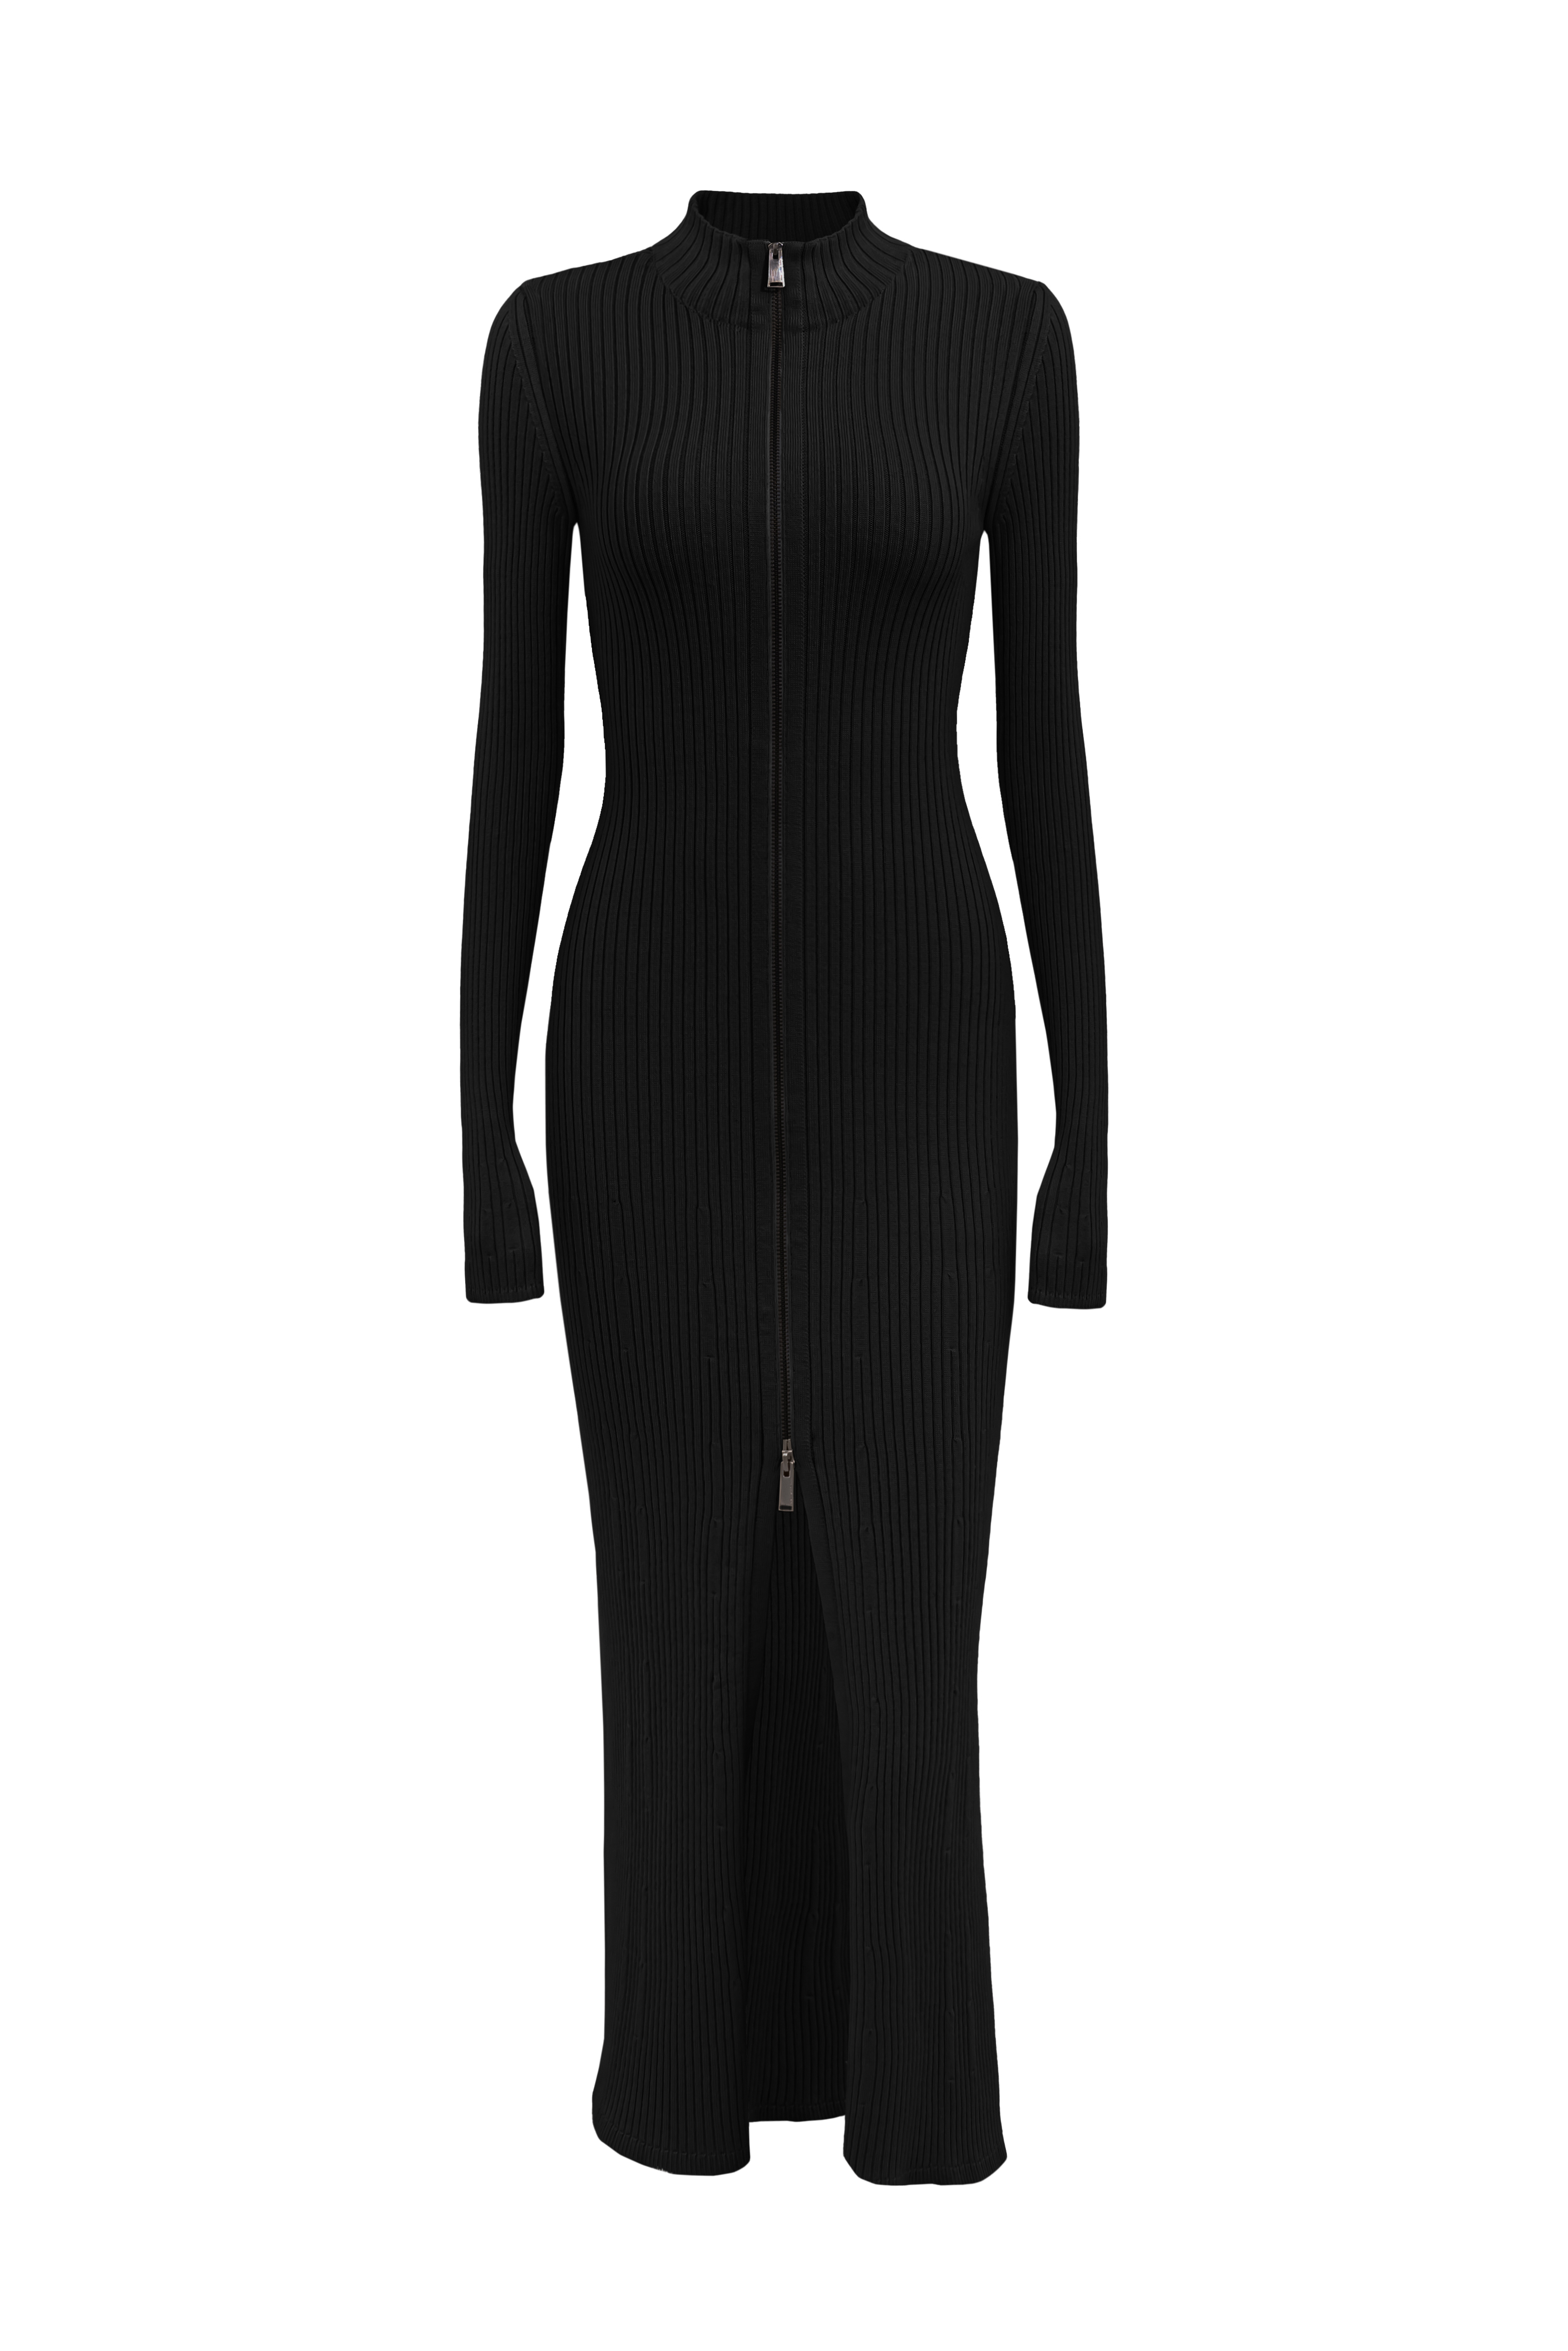 Dress 5047-01 Black from BRUSNiKA